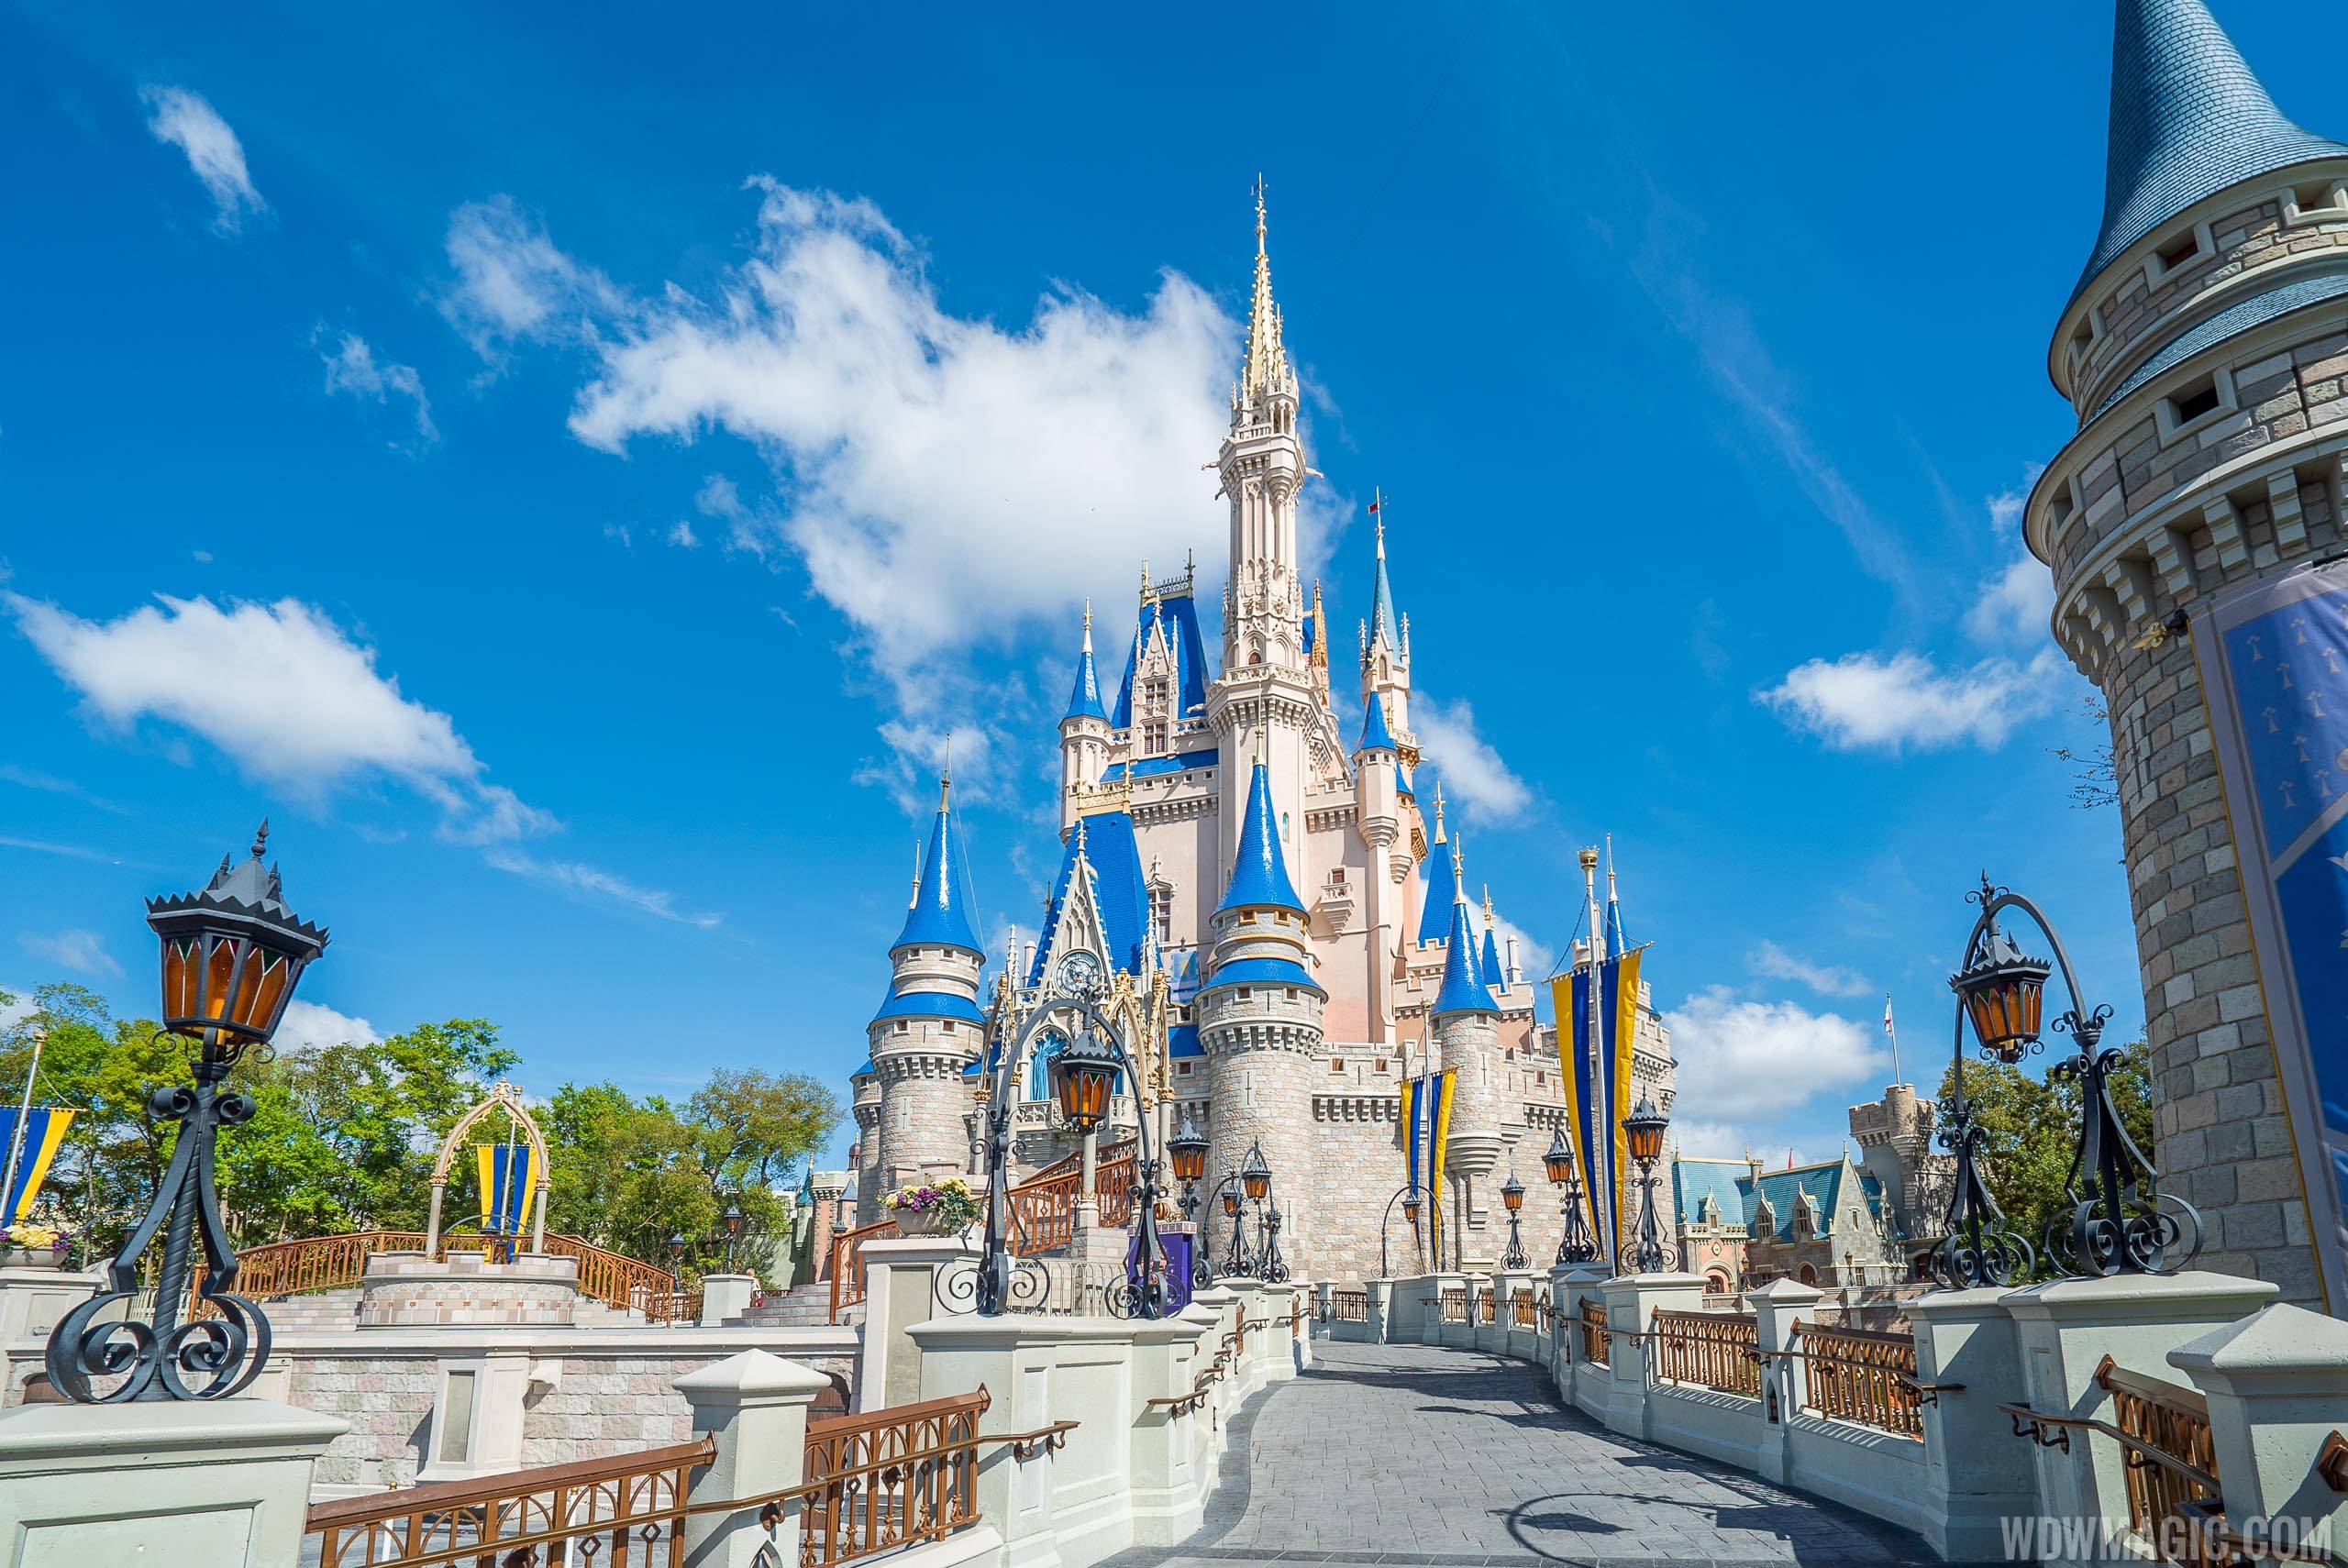 Walt Disney World theme parks closed March 16 due to coronavirus